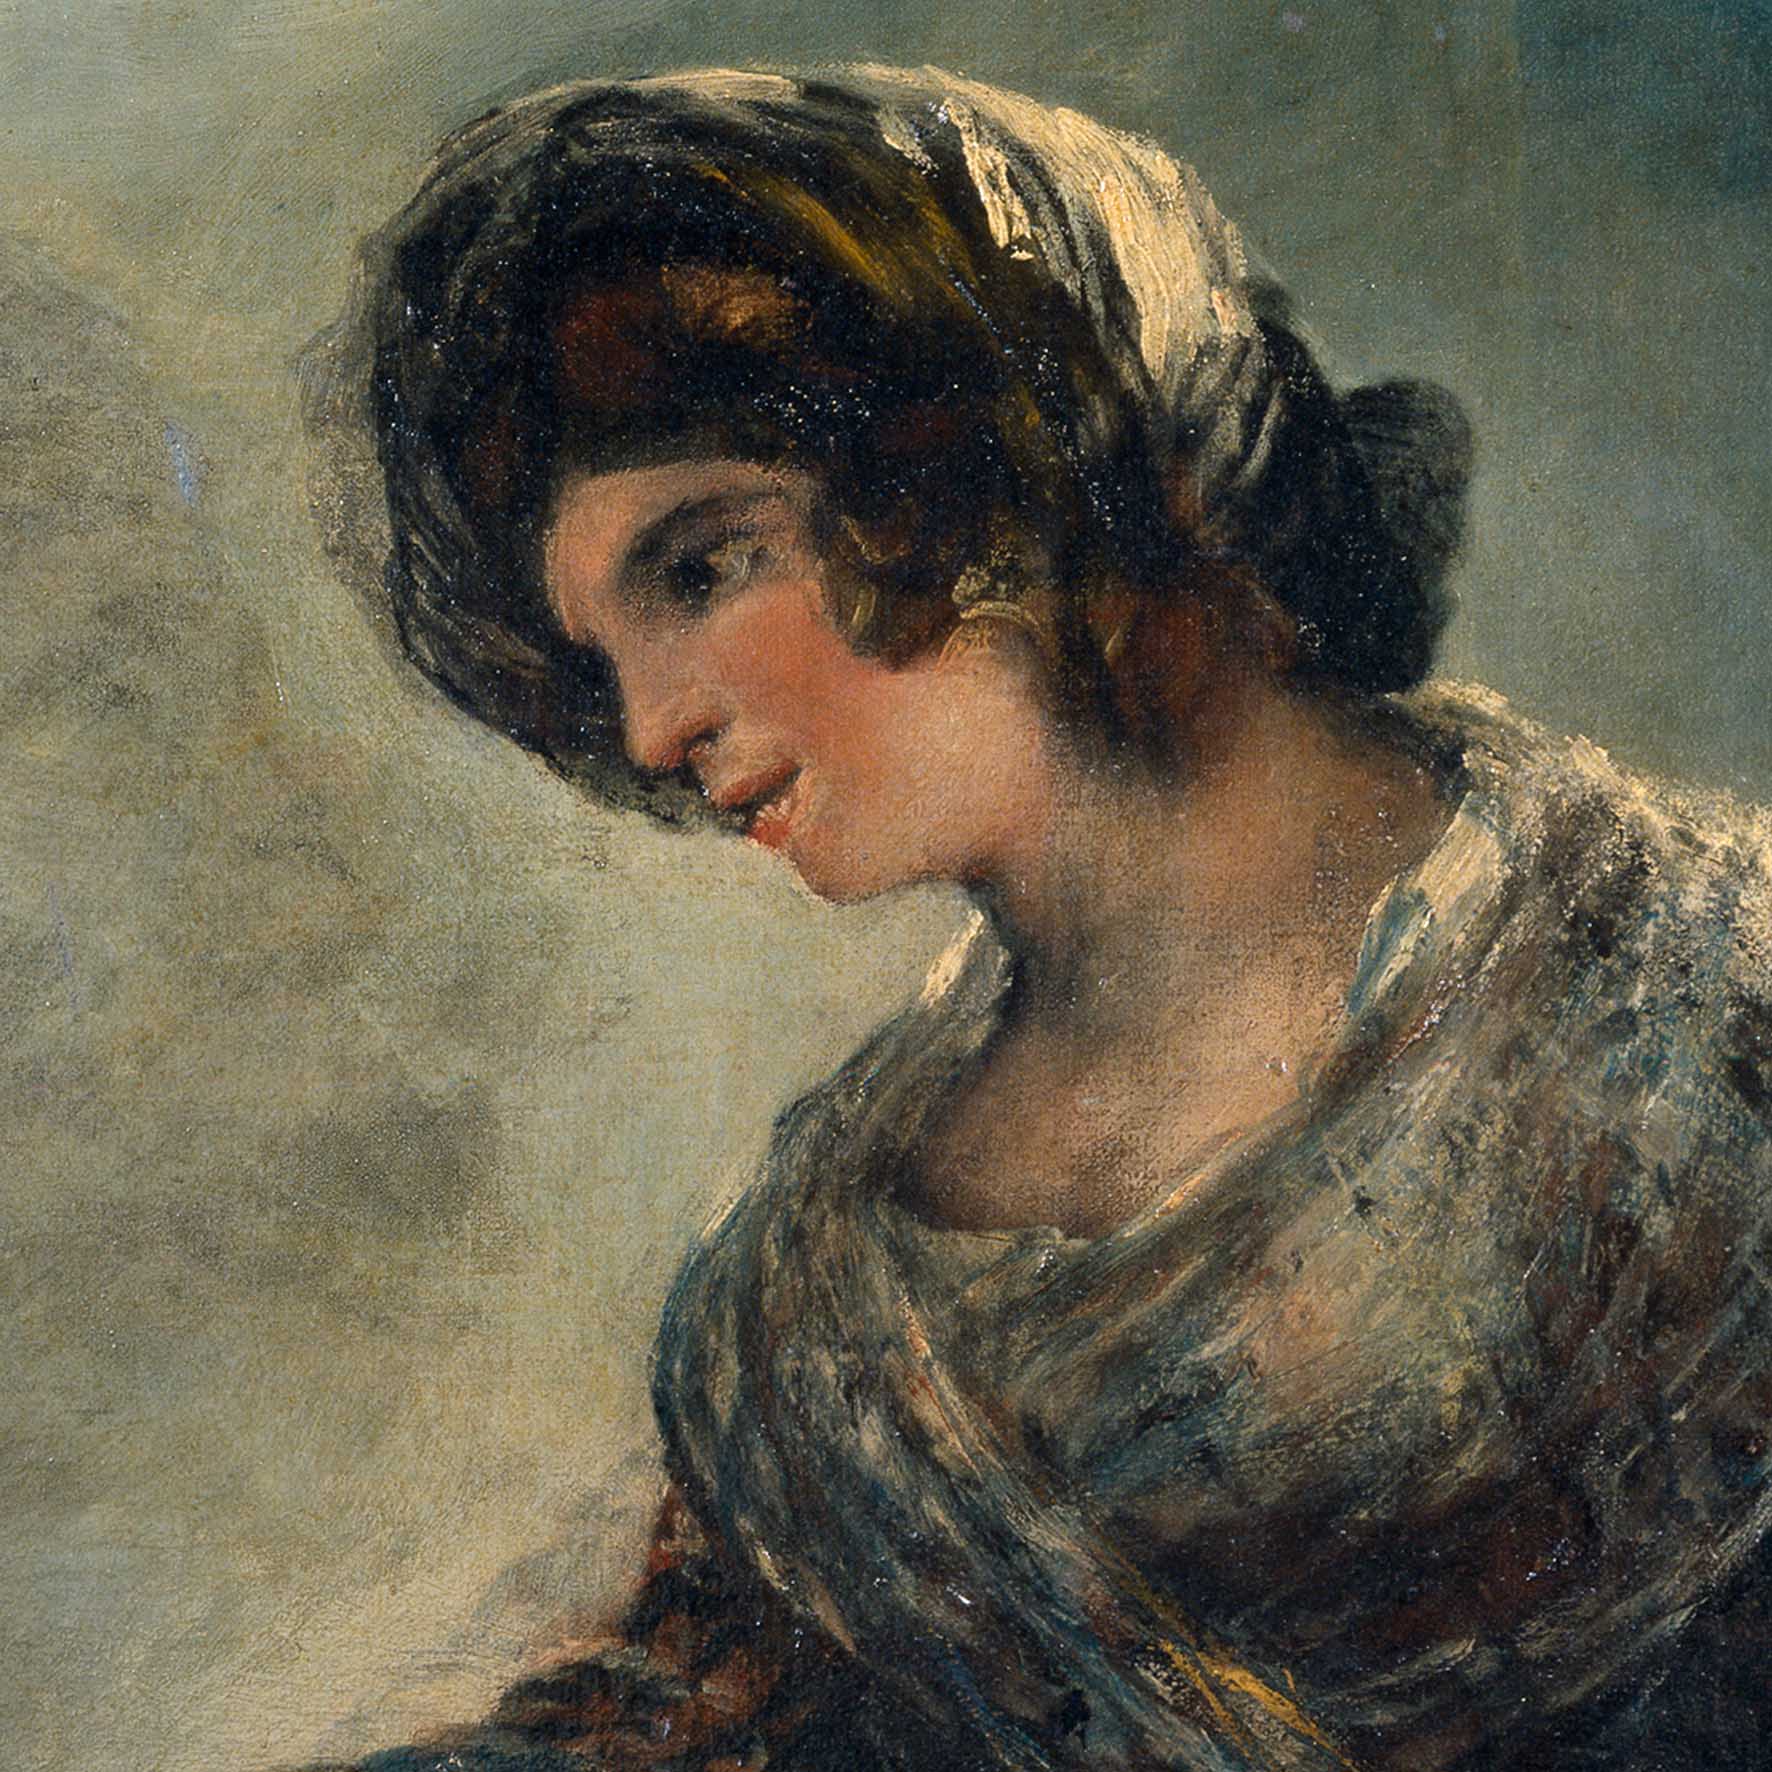 Goya and the modern world